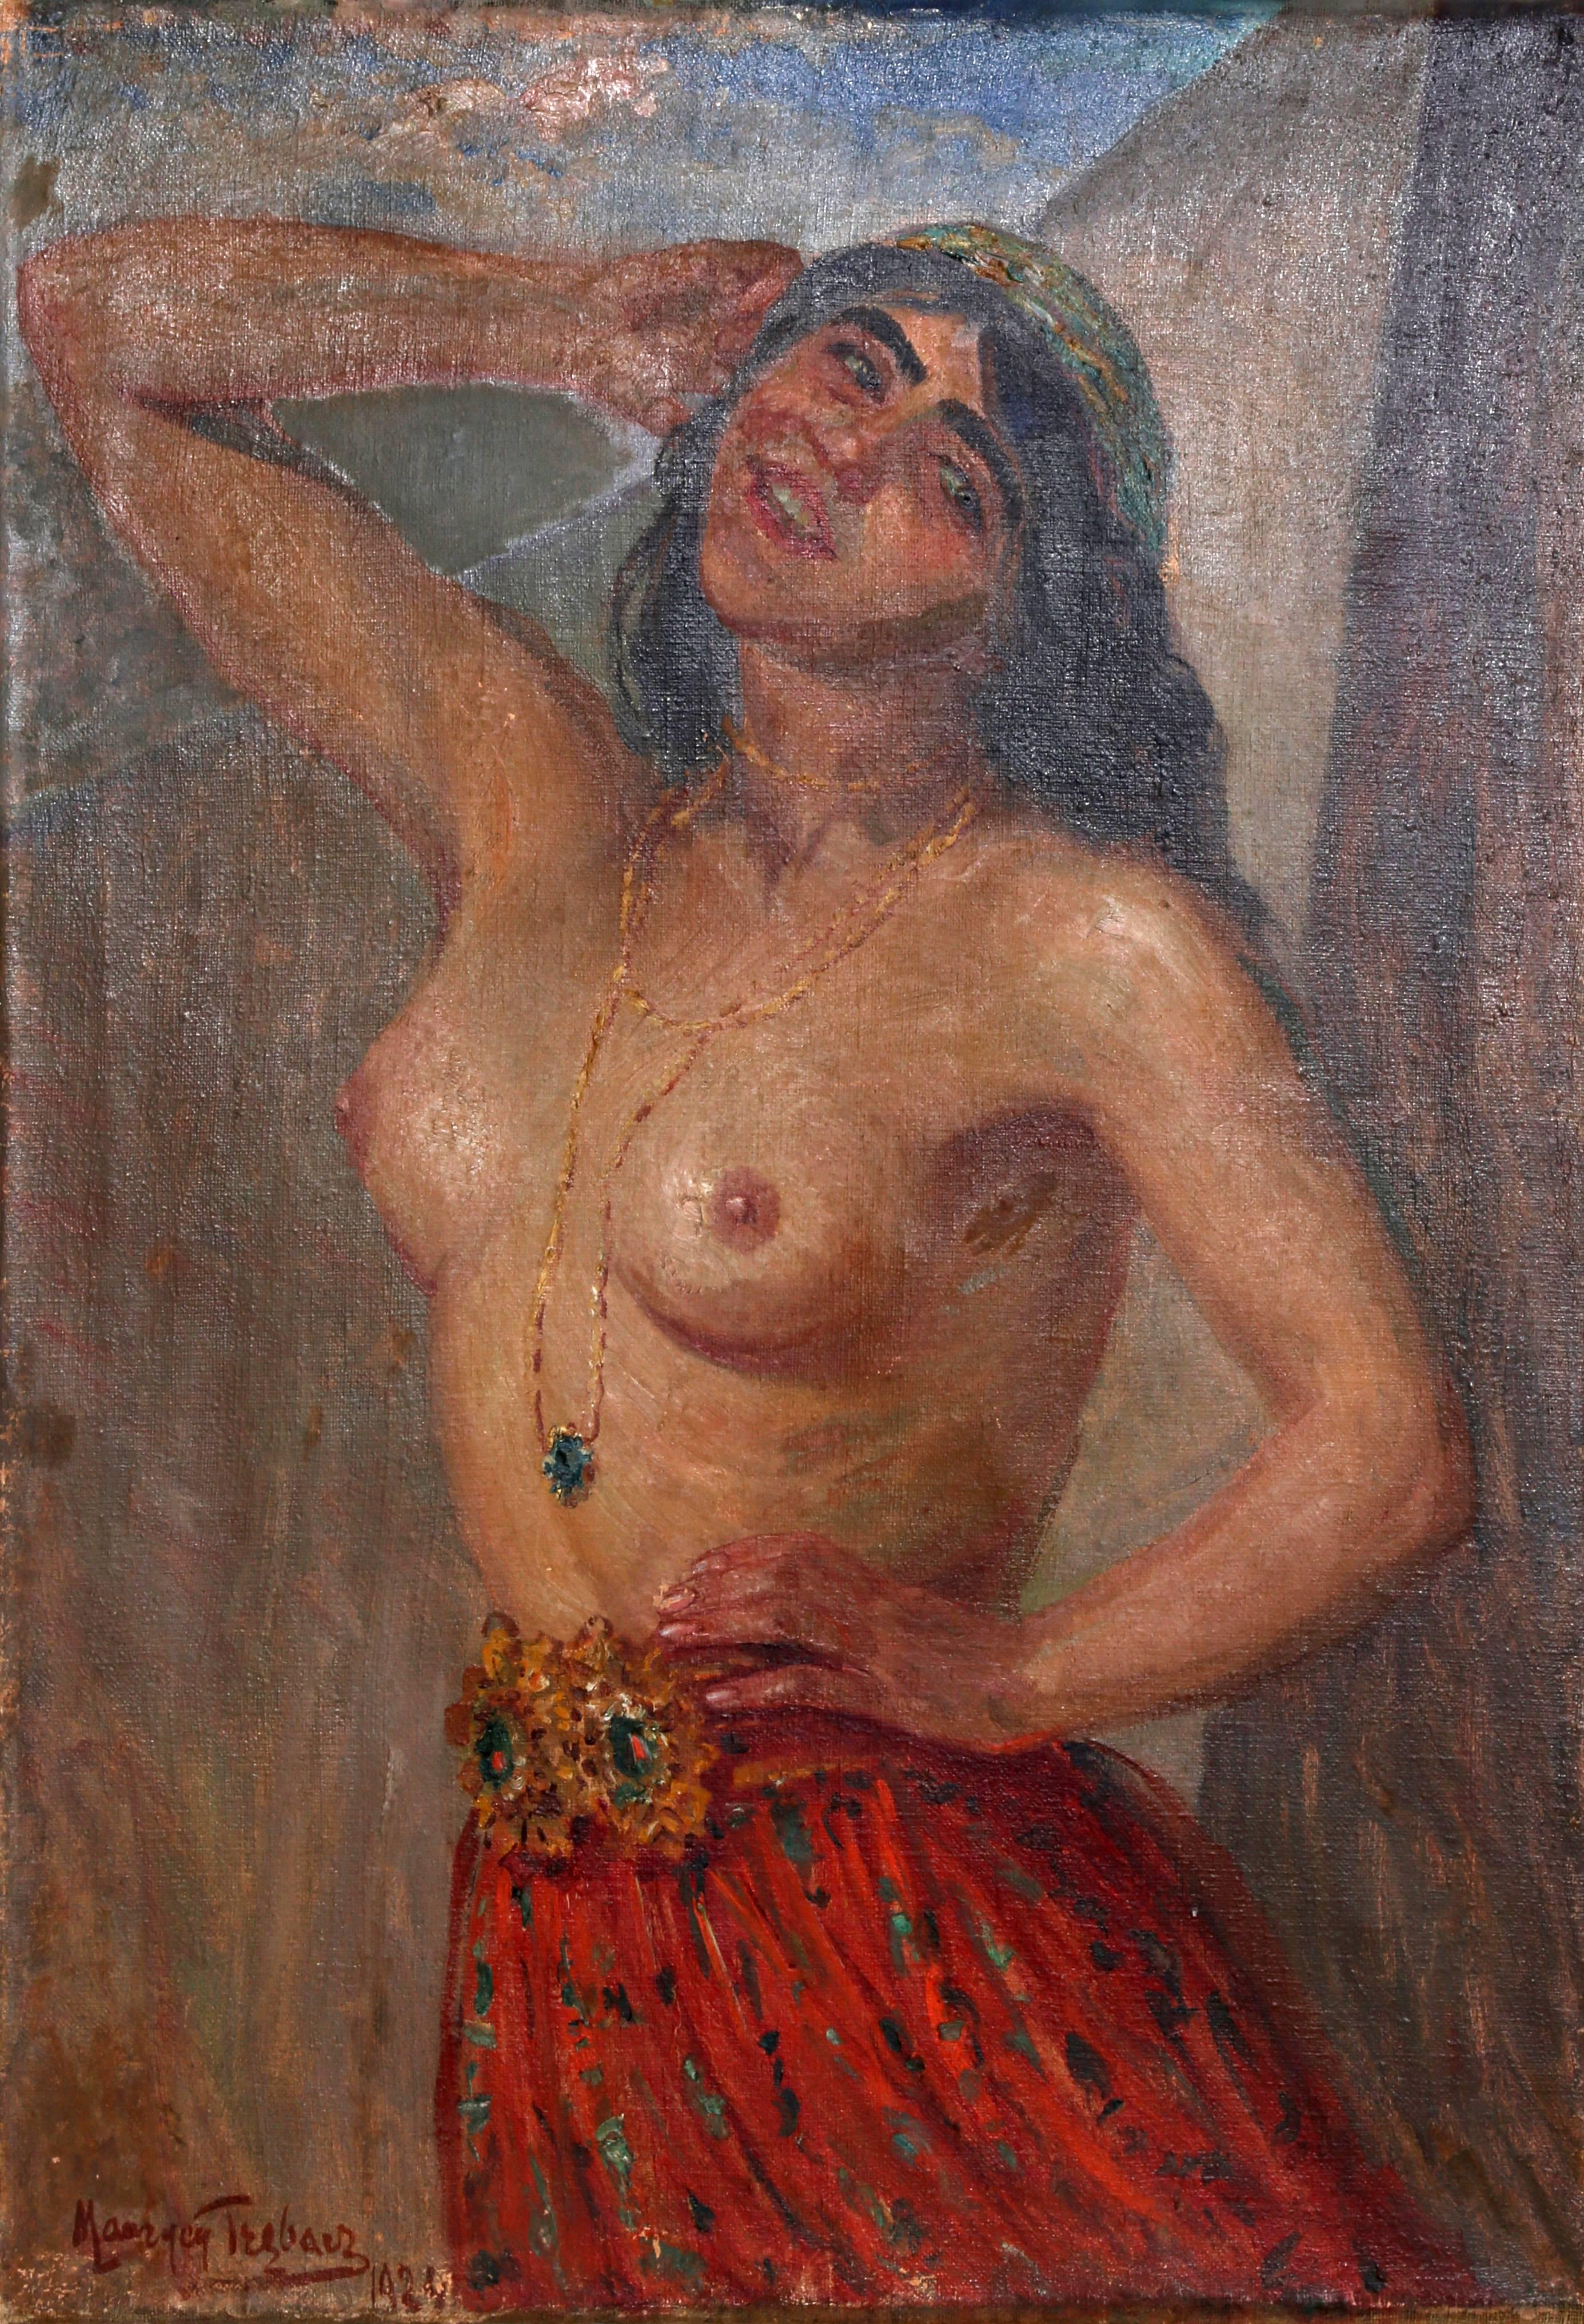 Artist: Maurycy Trebacz, Polish (1861-1941)
Title: Gypsy
Year: 1924
Medium: Oil on Canvas, signed and dated l.l.
Size: 39  x 27 in. (99.06  x 68.58 cm)